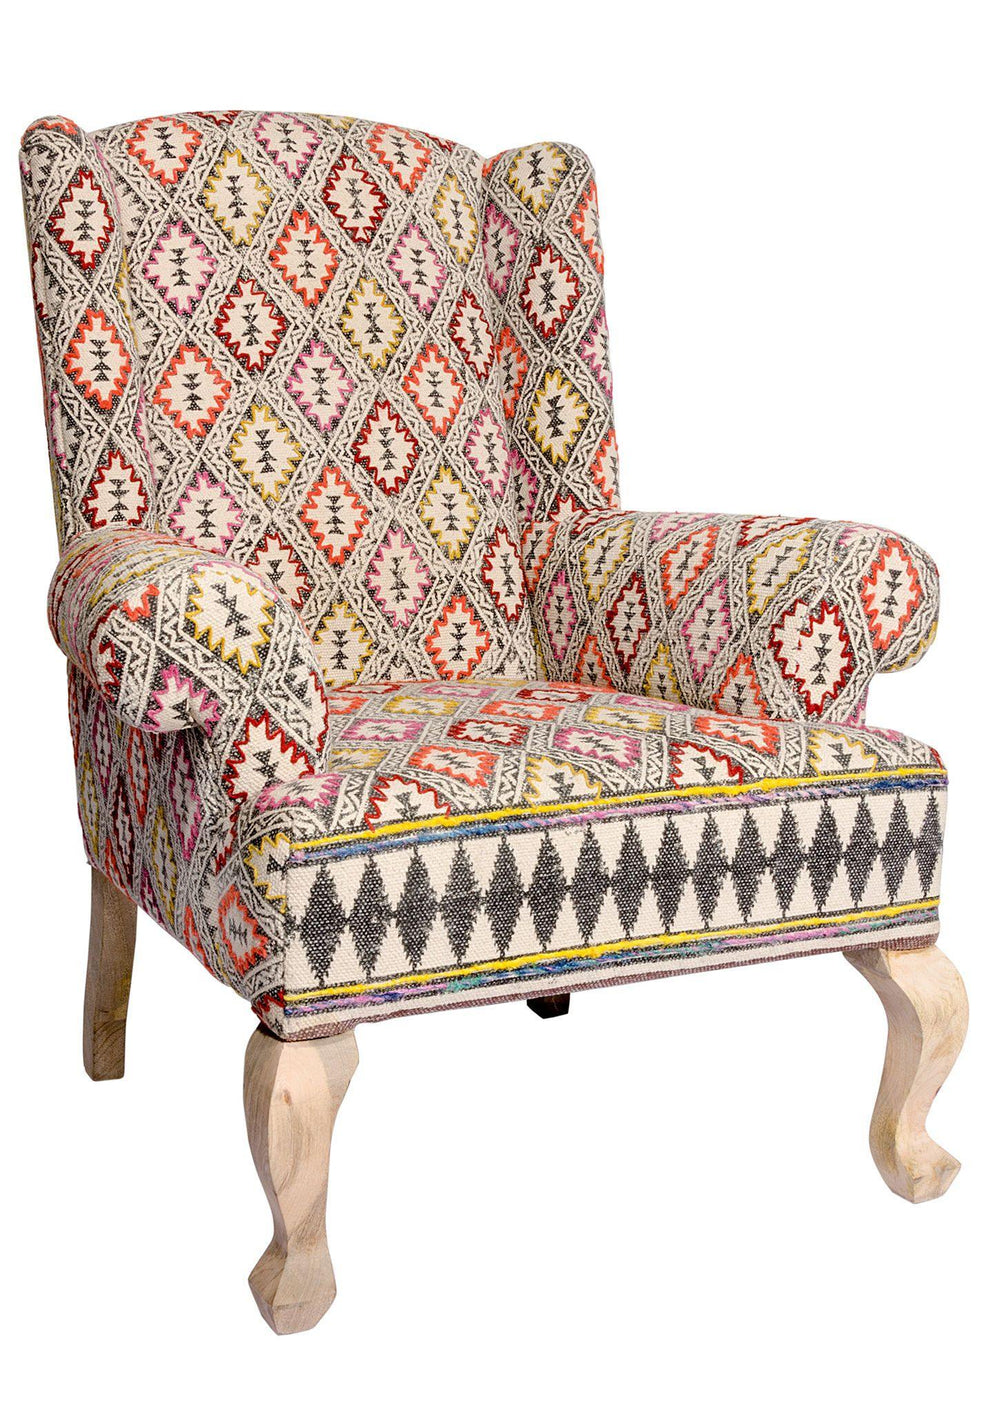 Indian Geometric Block Print Maharaja Upholstered Armchair - Second Nature Online